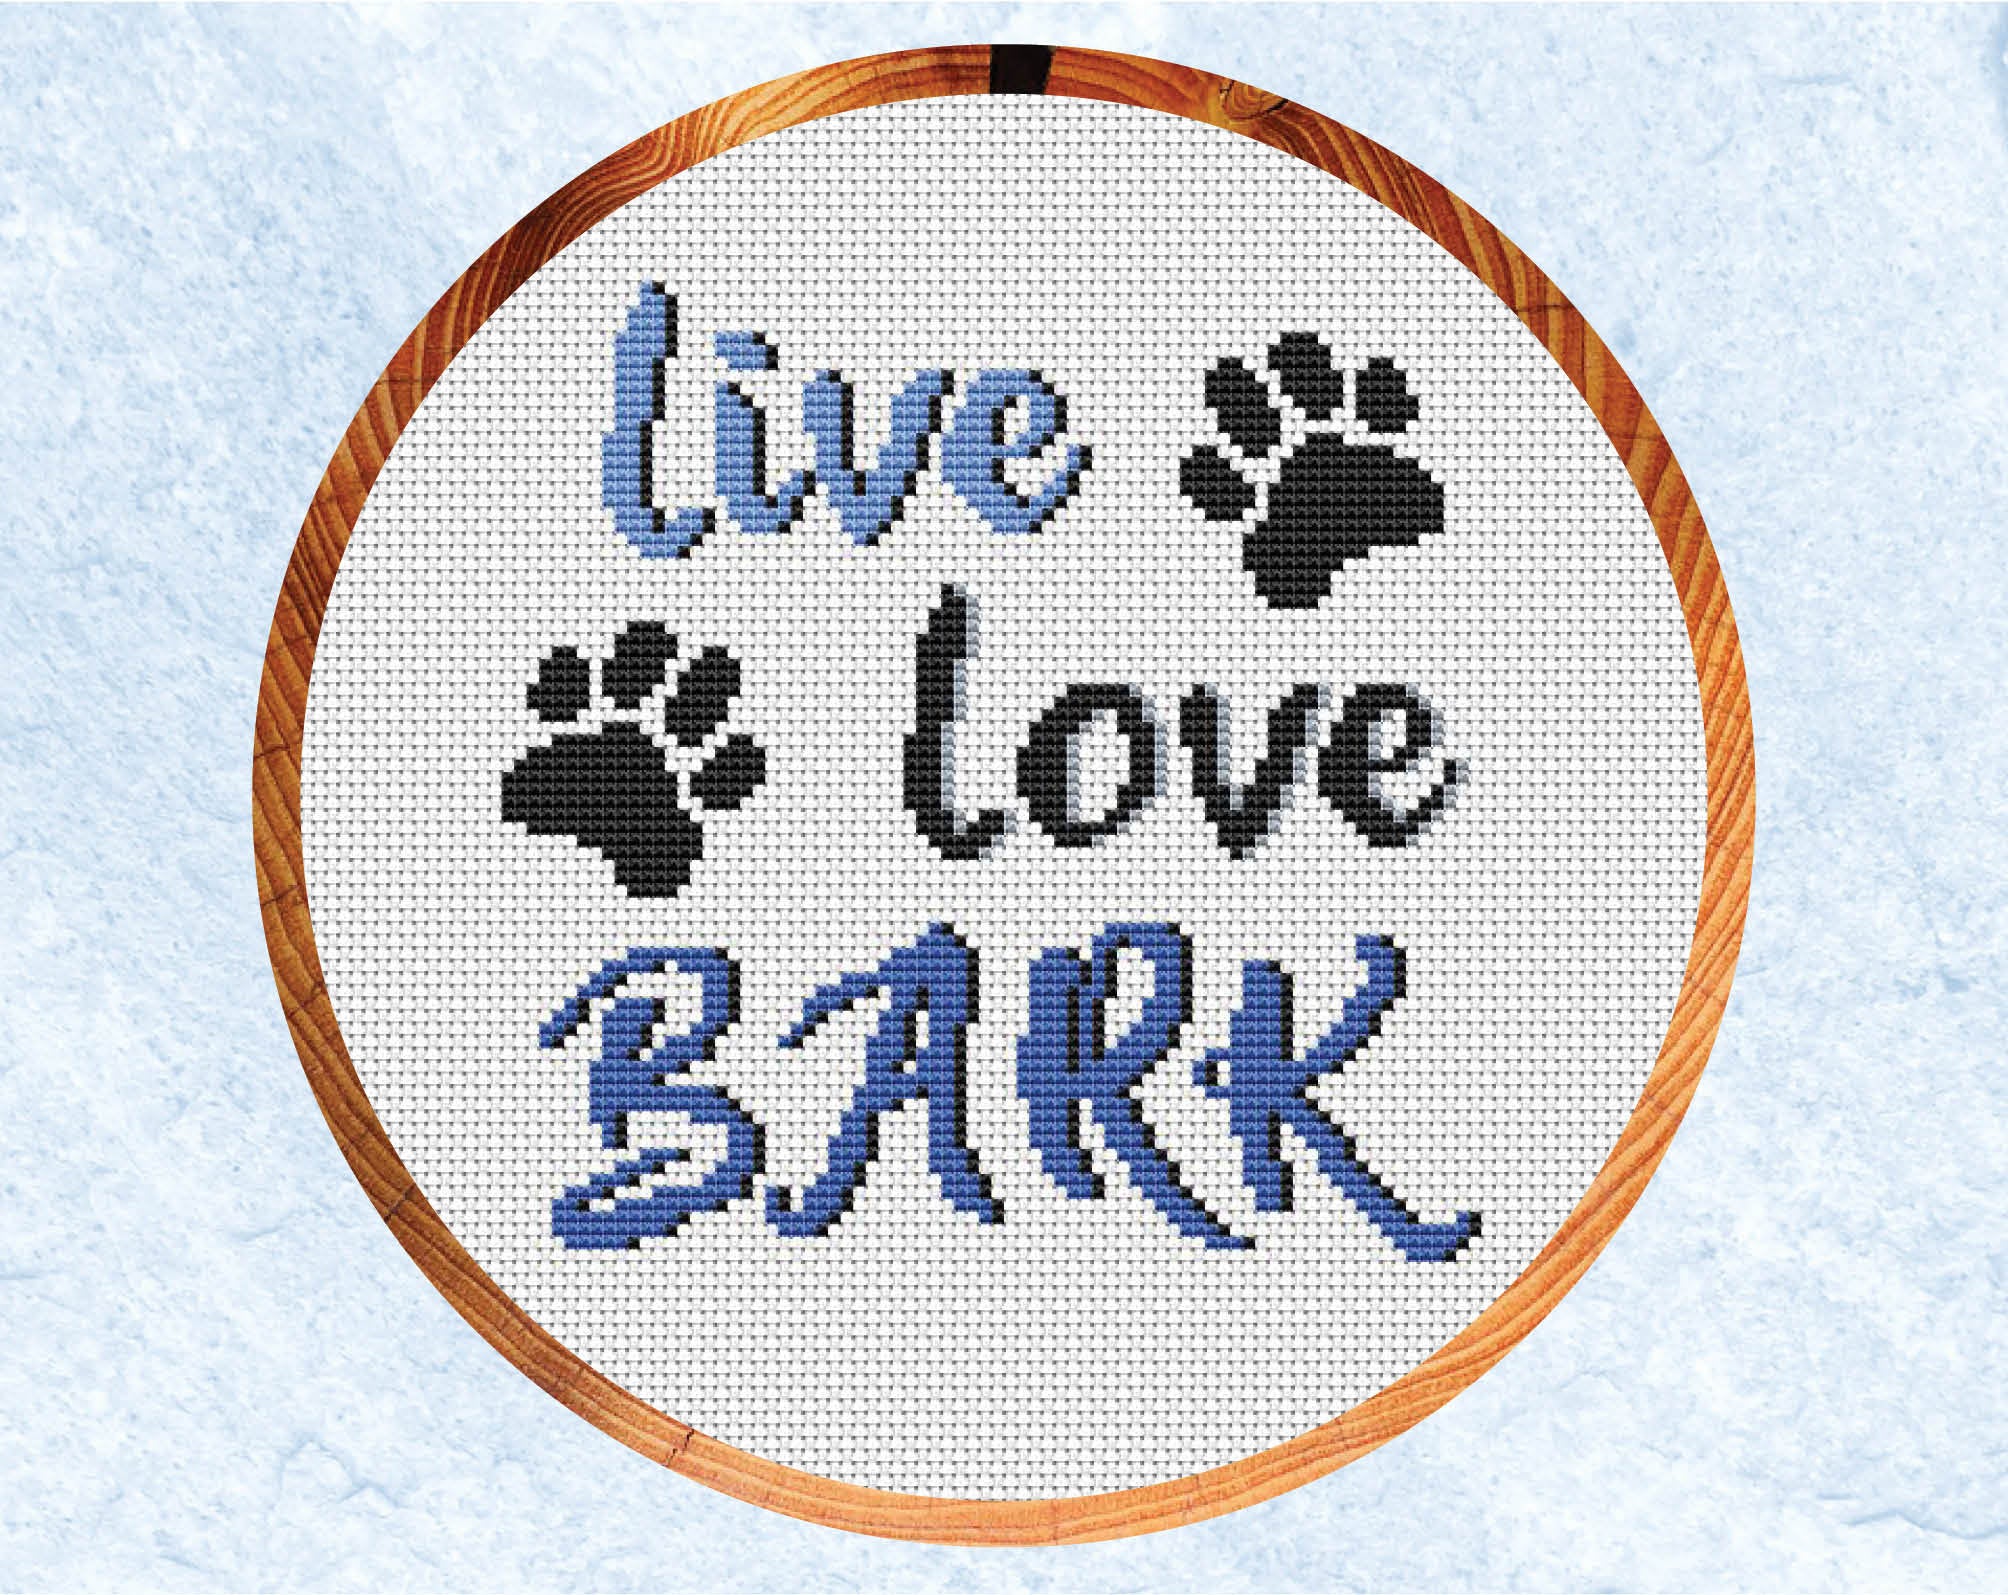 'Live Love Bark' - Dog cross stitch pattern in hoop